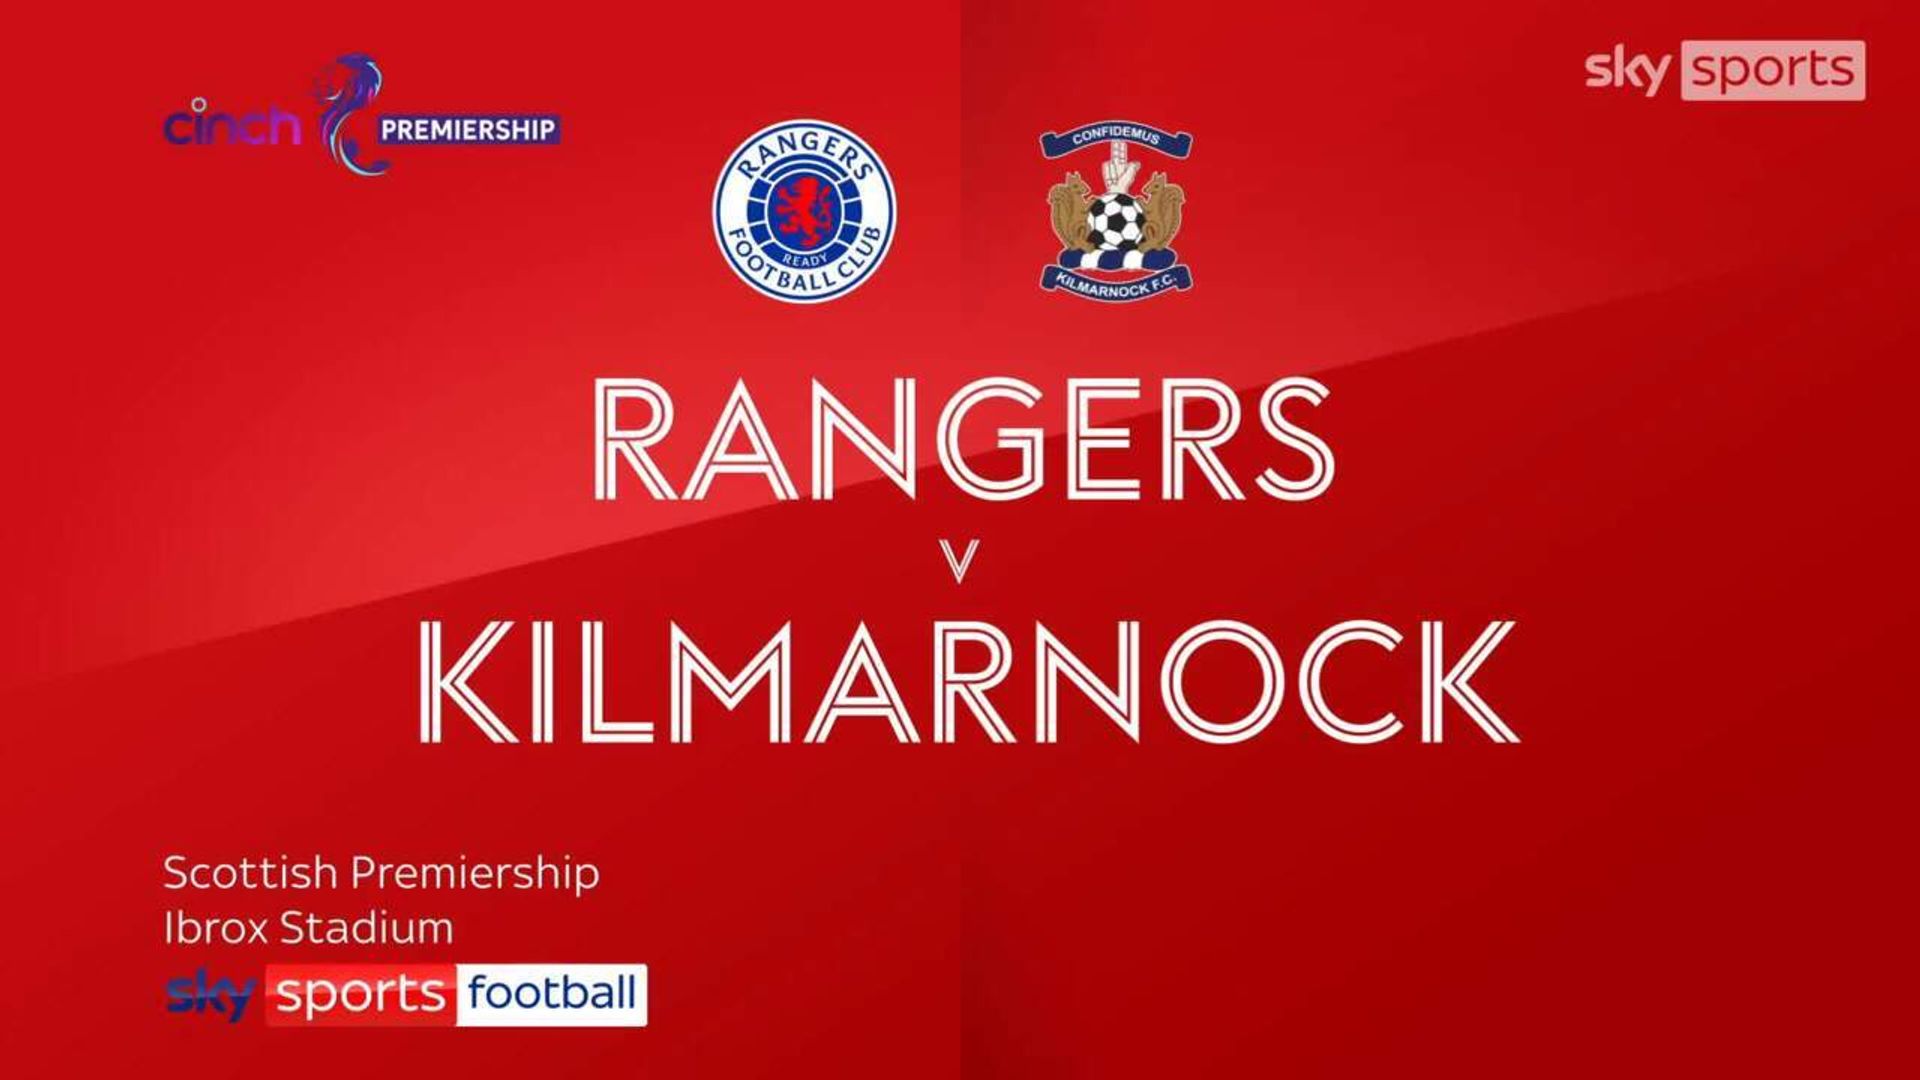 Rangers 4-1 Kilmarnock